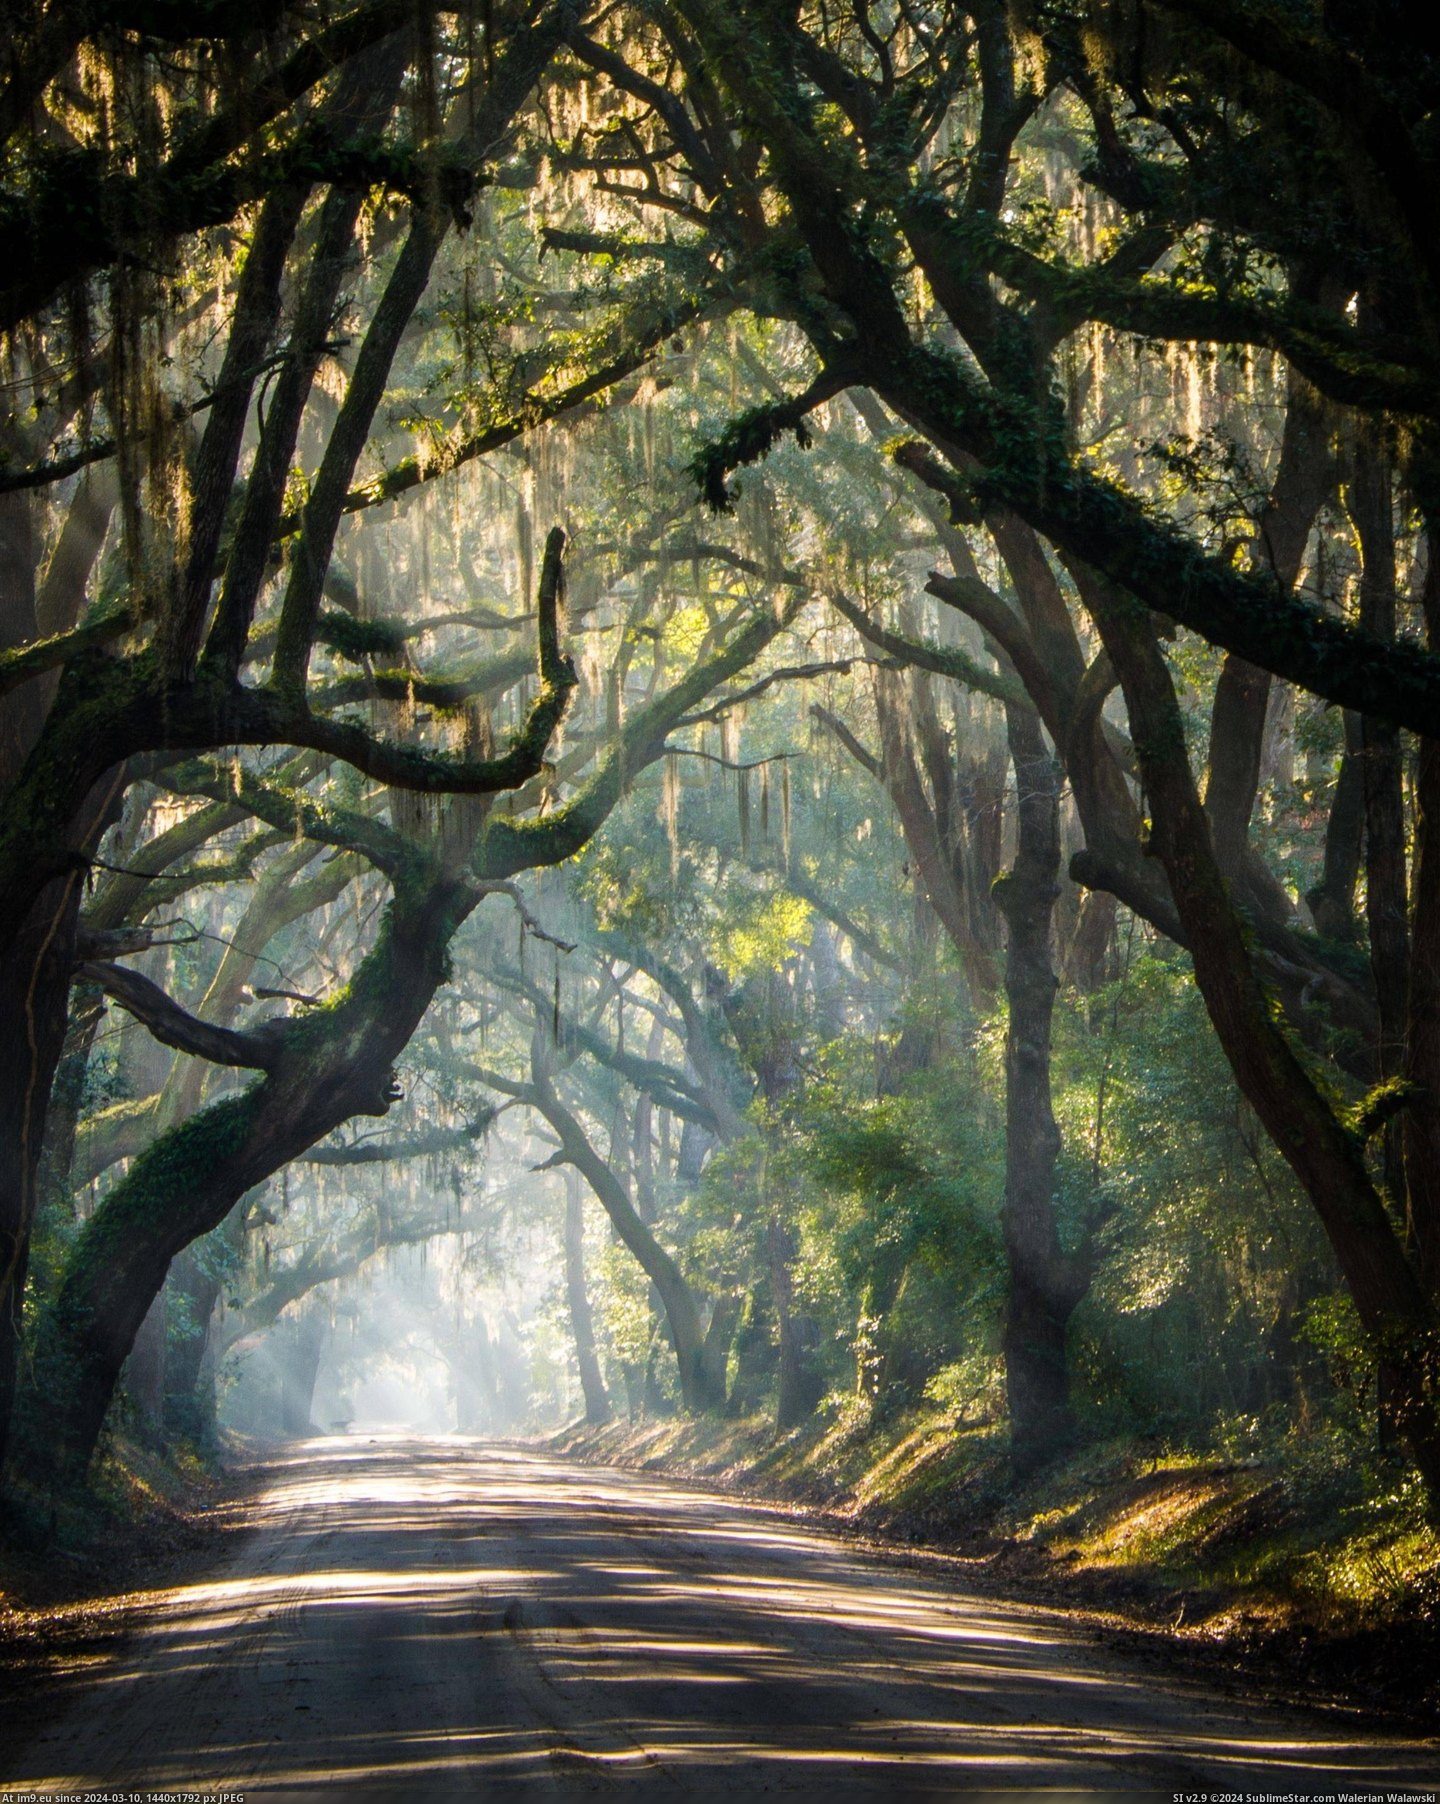 #South #Rural #Roads #Carolina [Pics] The rural roads of South Carolina Pic. (Image of album My r/PICS favs))